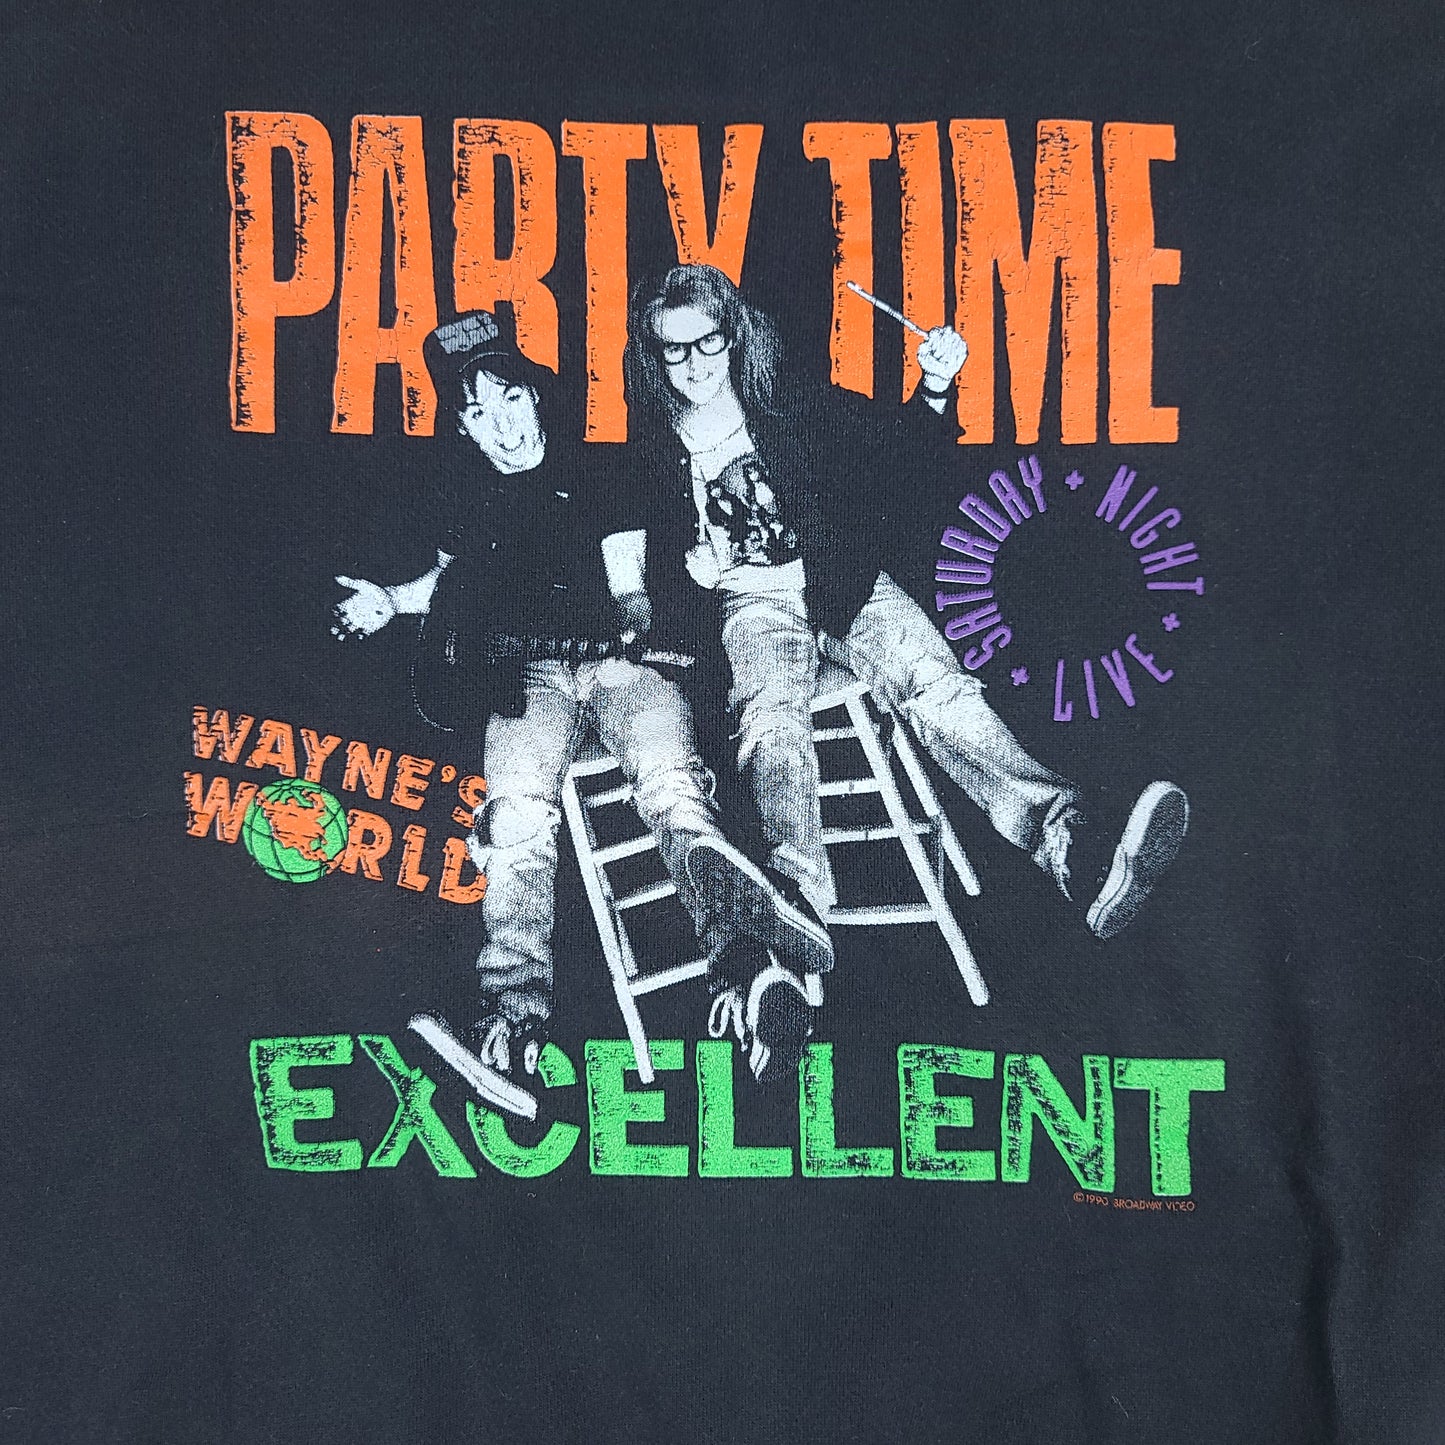 Vintage Wayne's World Party Time Black Sweatshirt